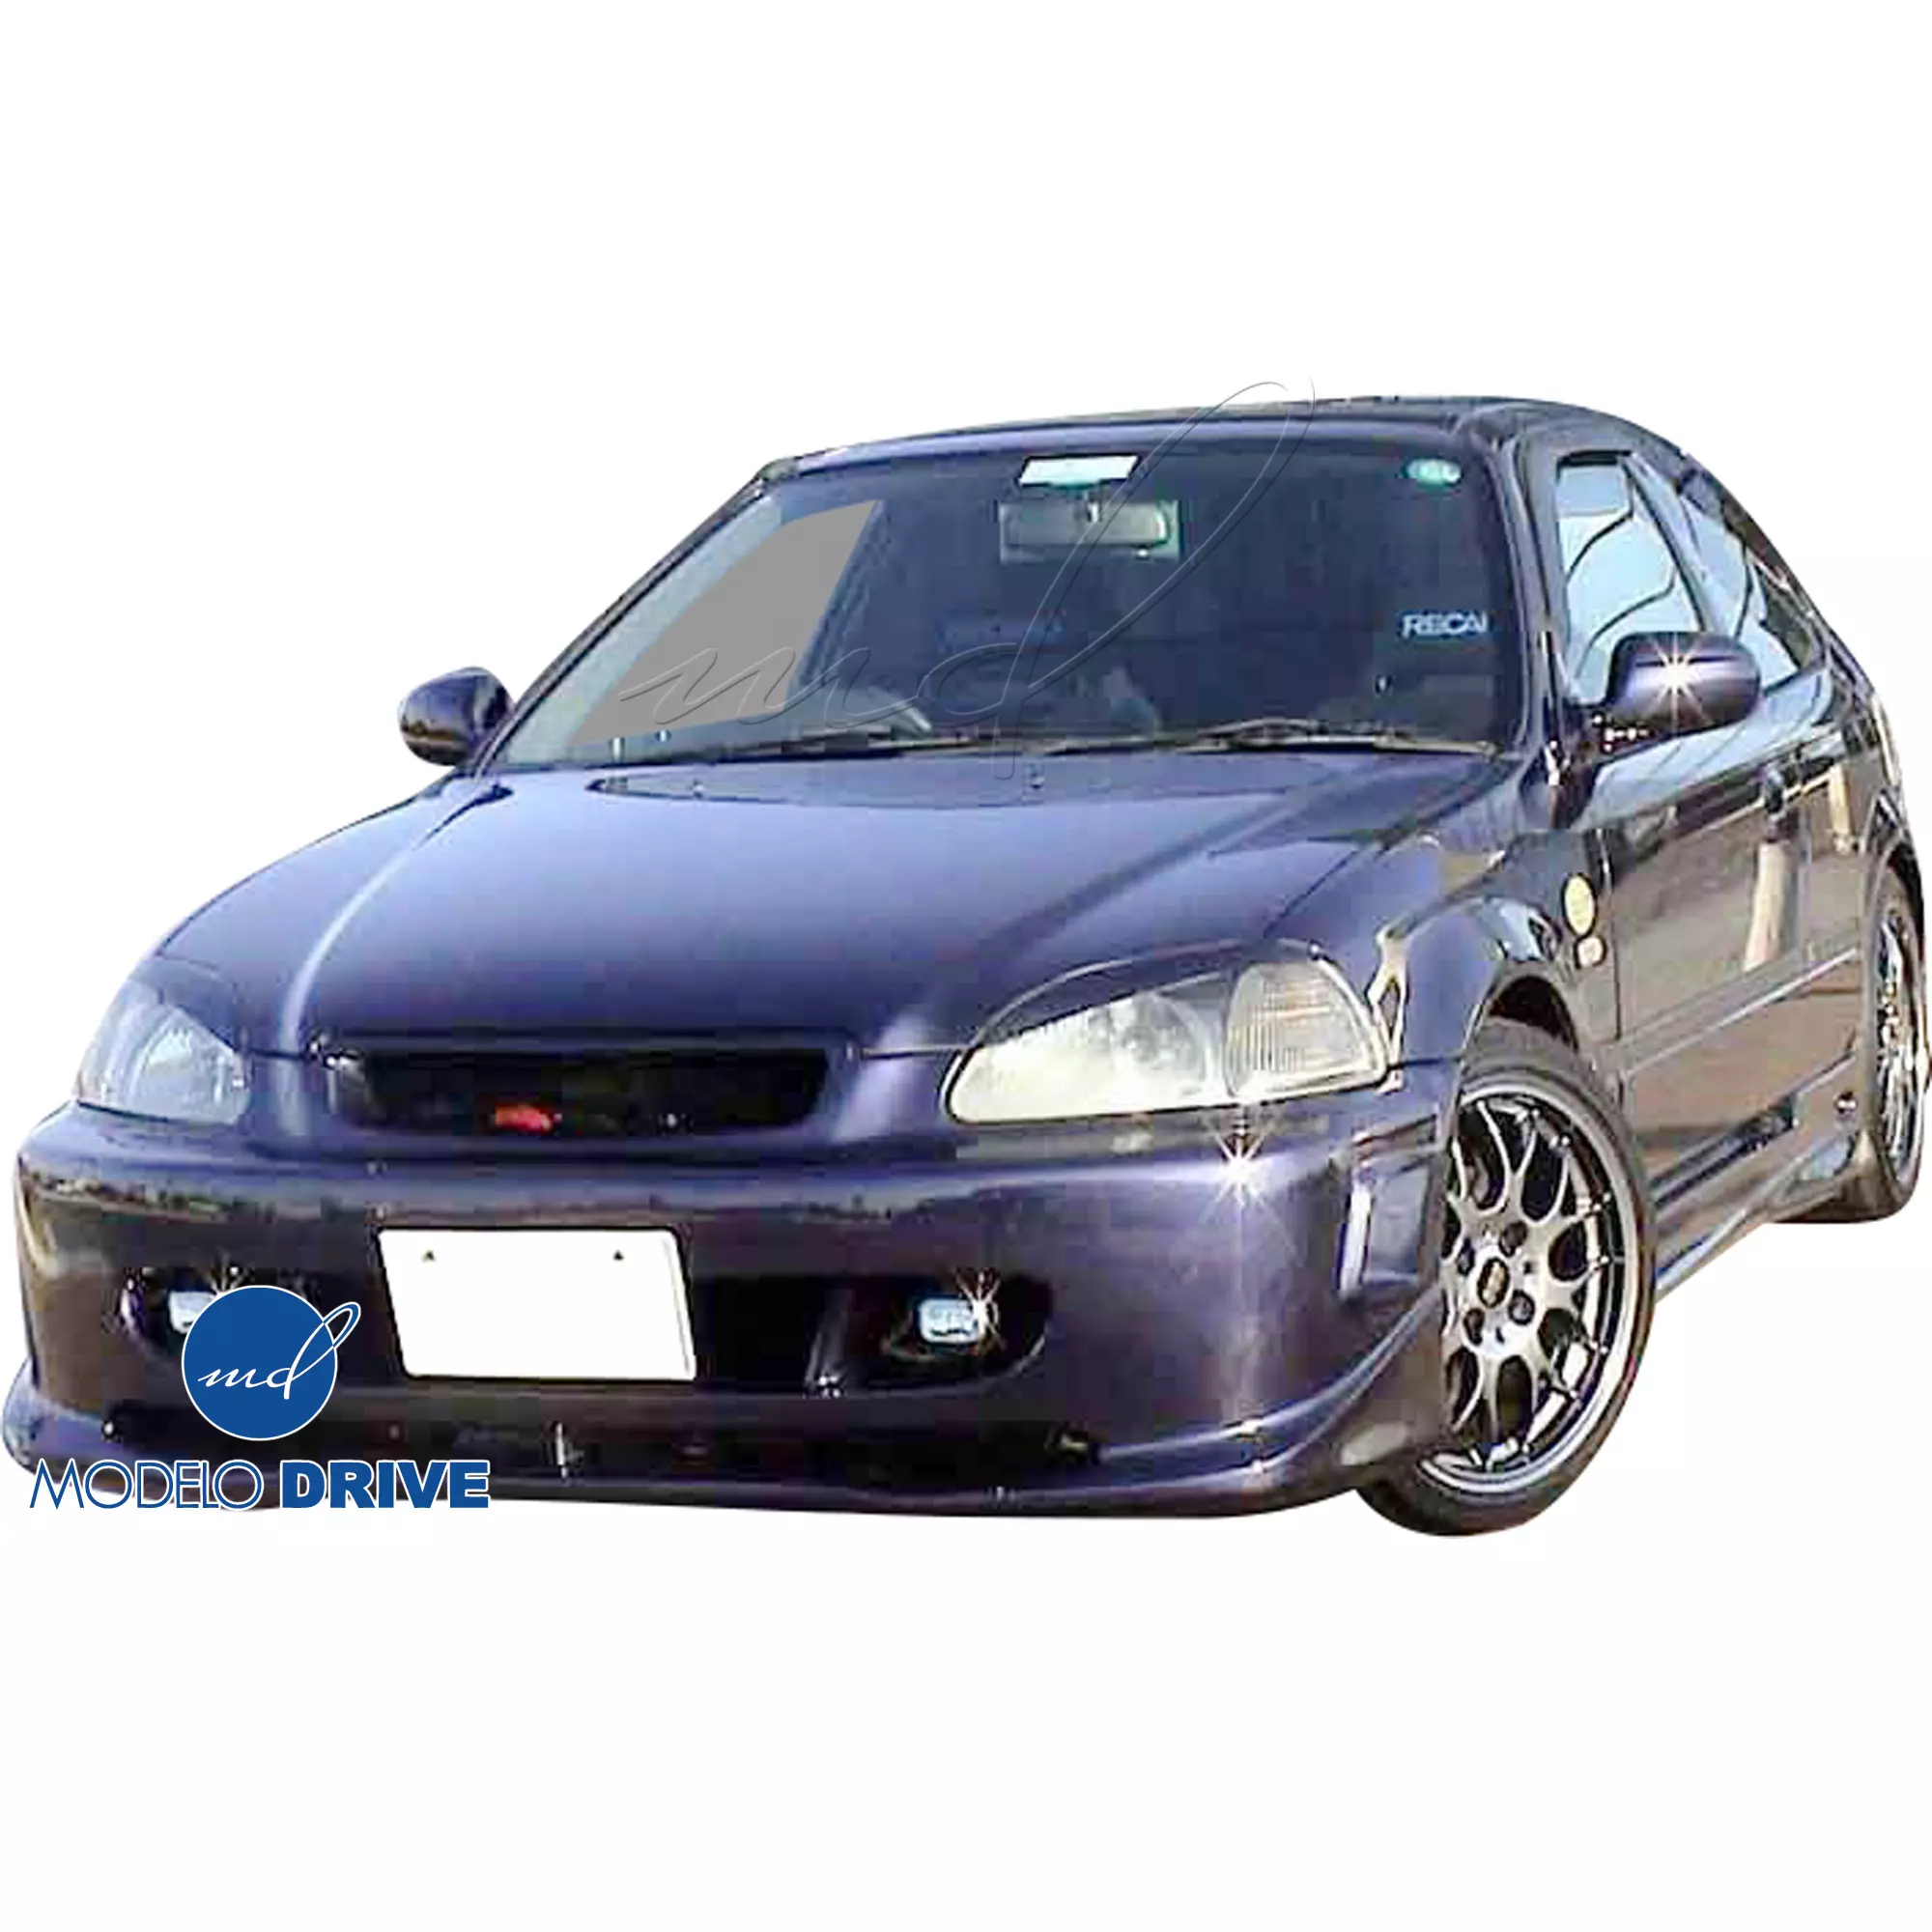 ModeloDrive FRP ZEA Body Kit 4pc > Honda Civic EK9 1996-1998 > 3-Door Hatch - Image 2